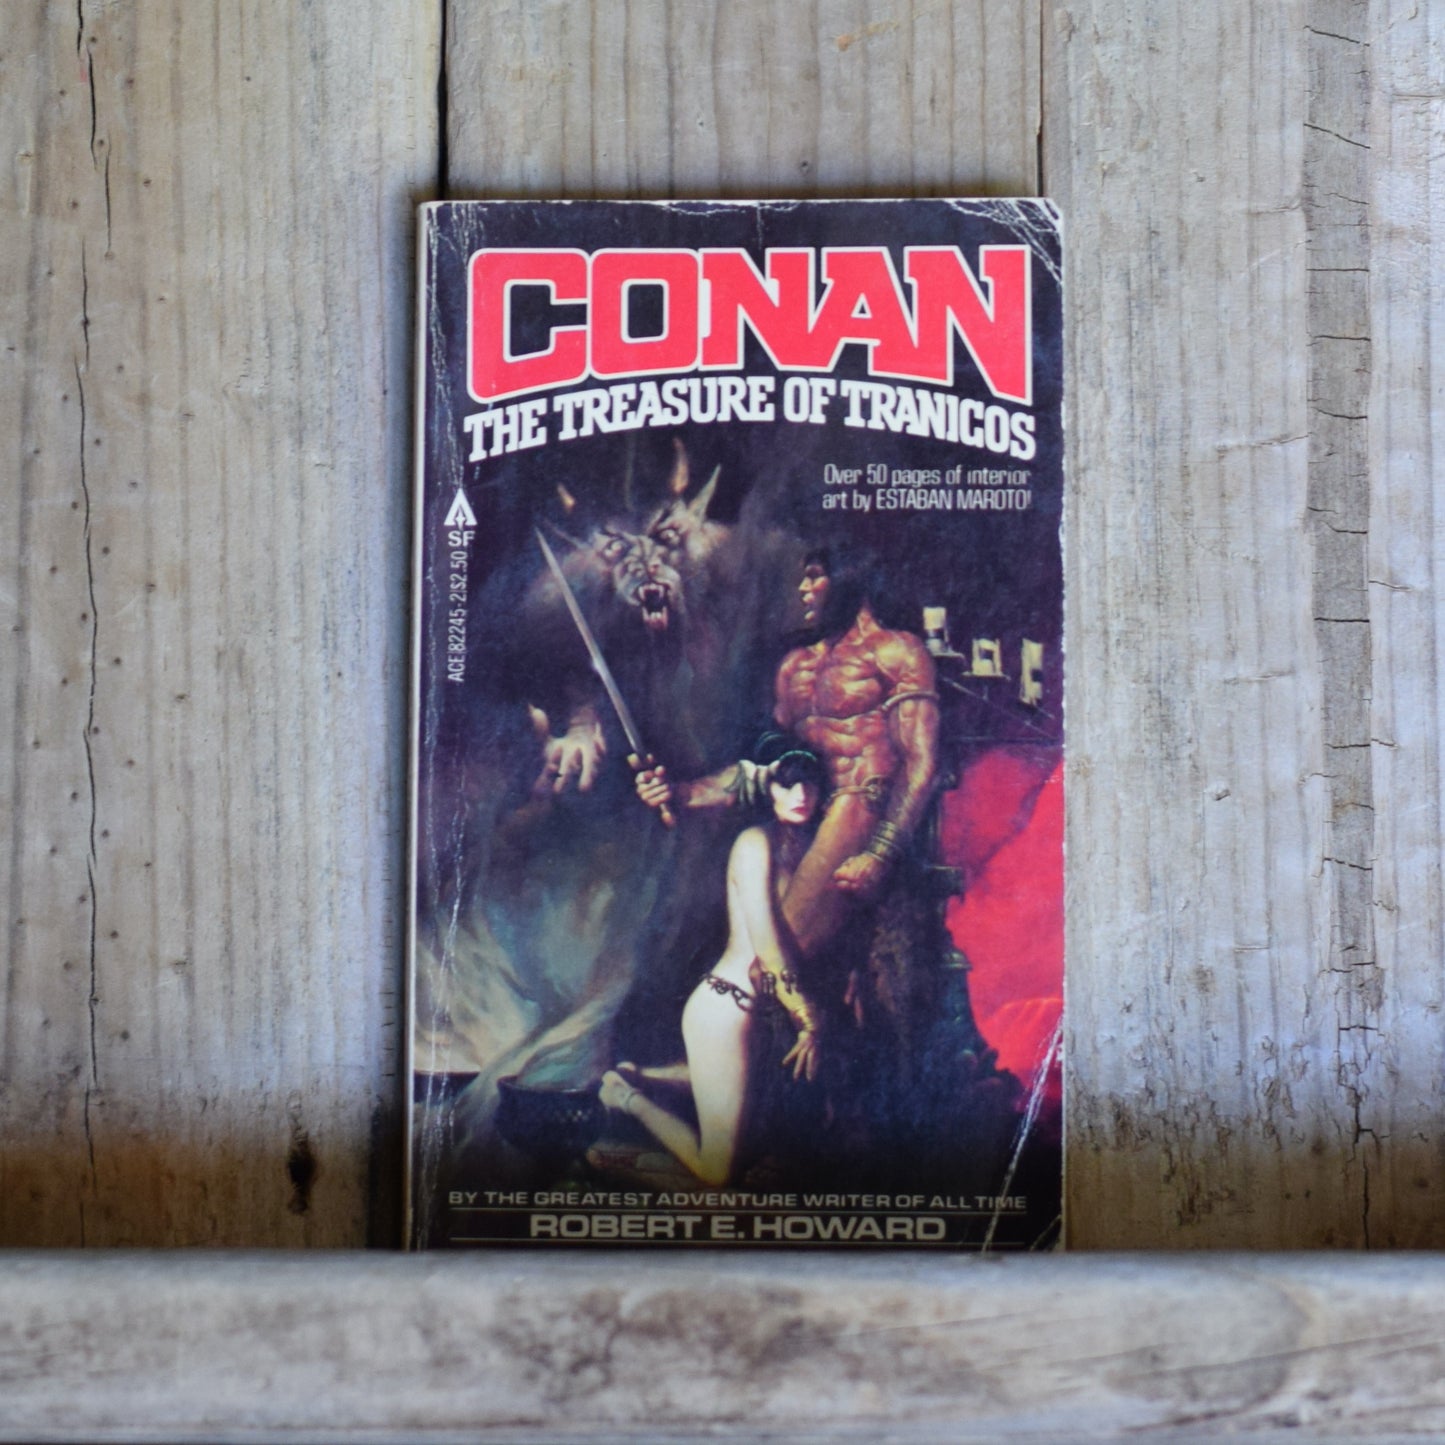 Vintage Fantasy Paperback: Robert E Howard - Conan The Treasure of Tranicos